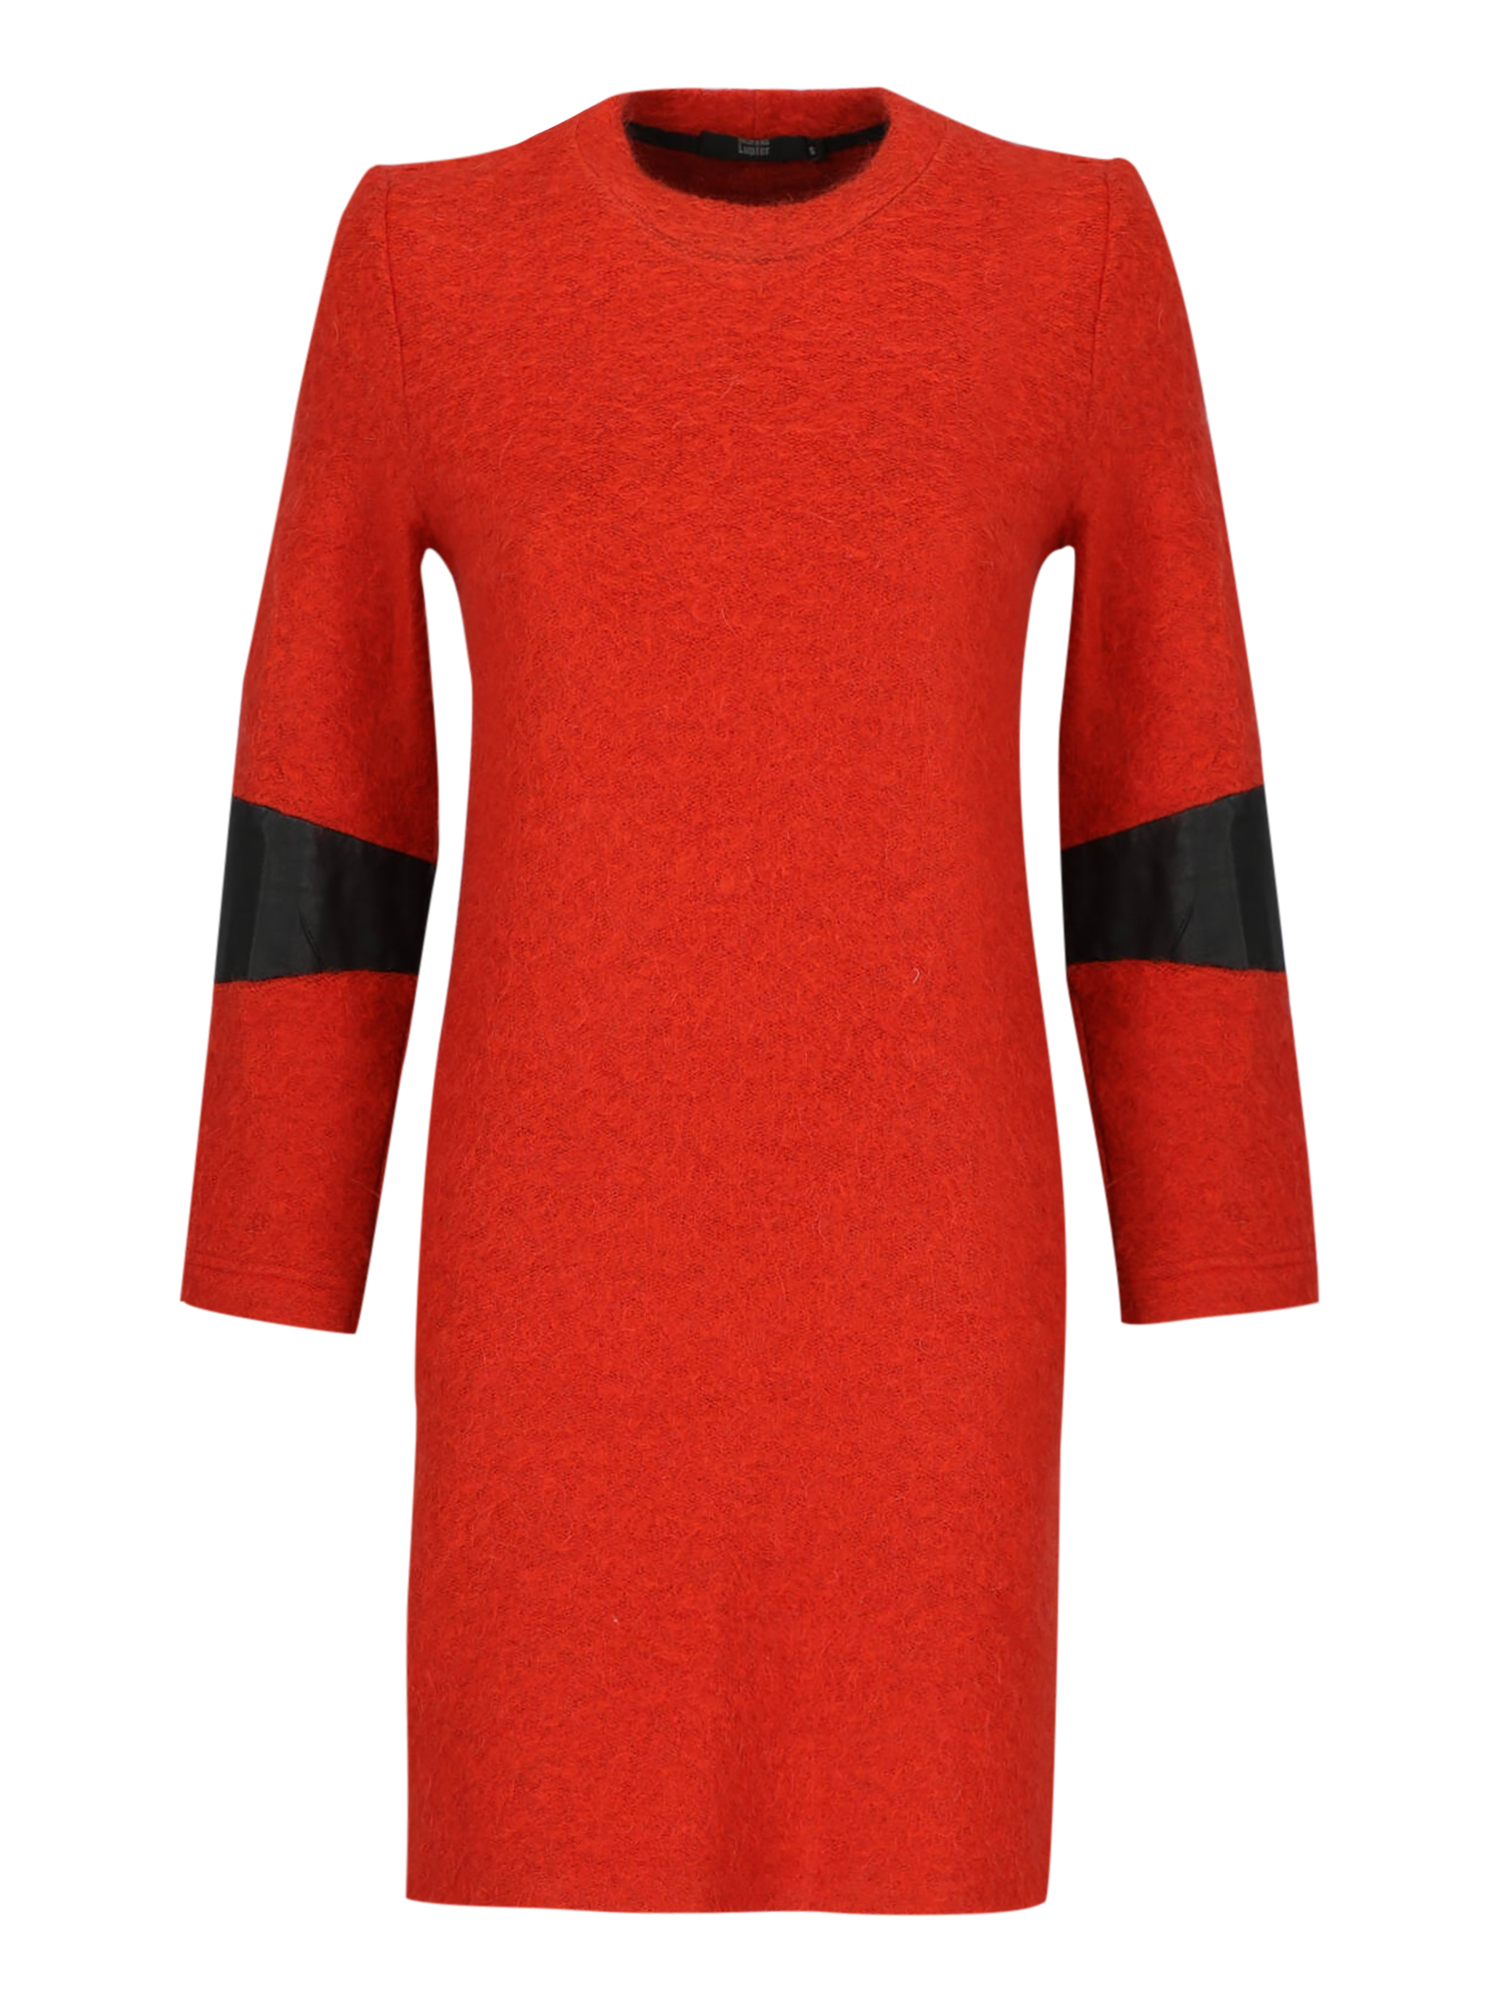 Robes Pour Femme - Markus Lupfer - En Wool Orange - Taille:  -